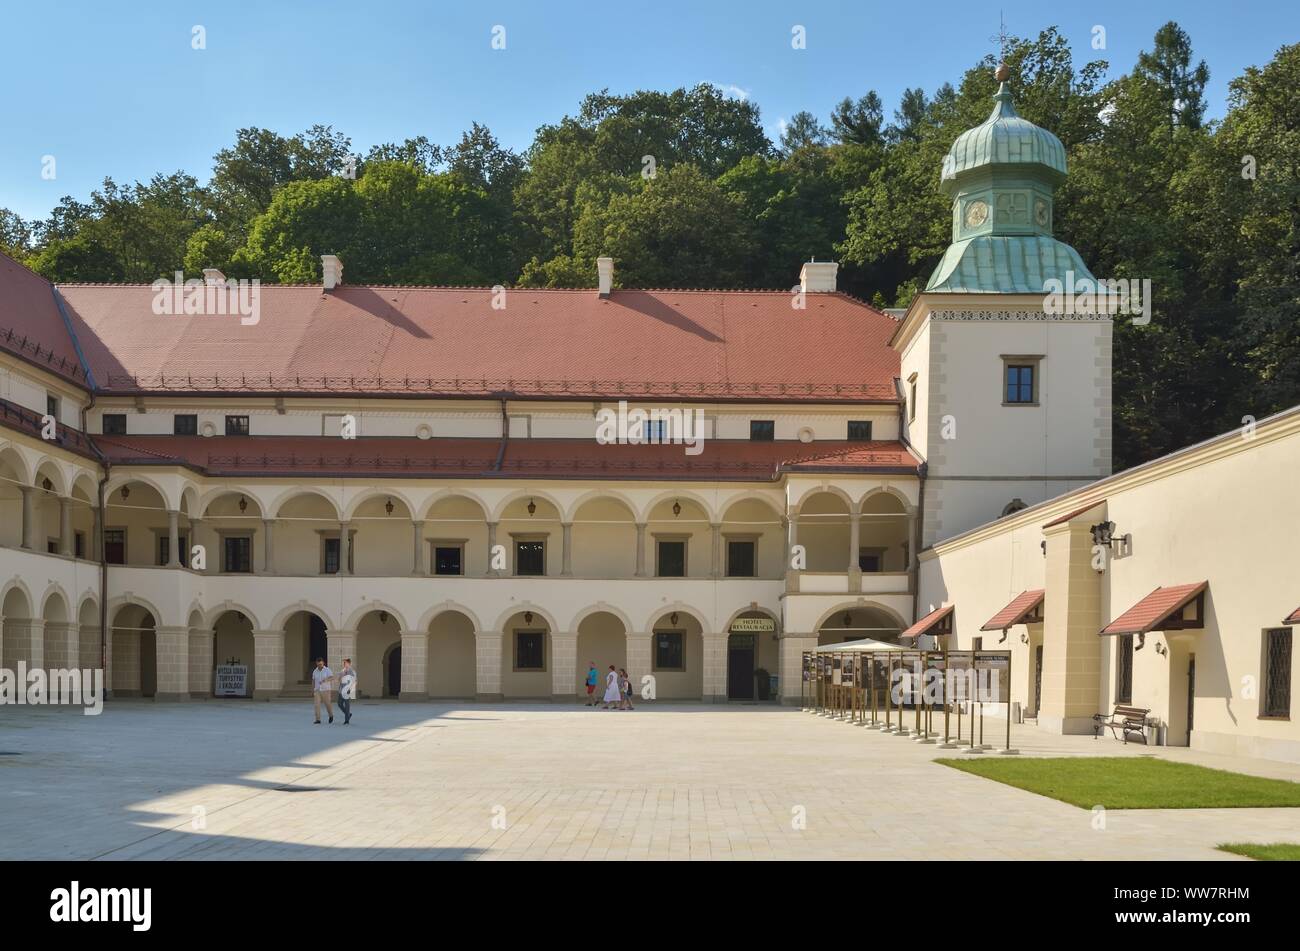 SUCHA BESKIDZKA, POLAND - SEPTEMBER 1, 2019: Historic renaissance castle in Sucha Beskidzka, Poland. Stock Photo